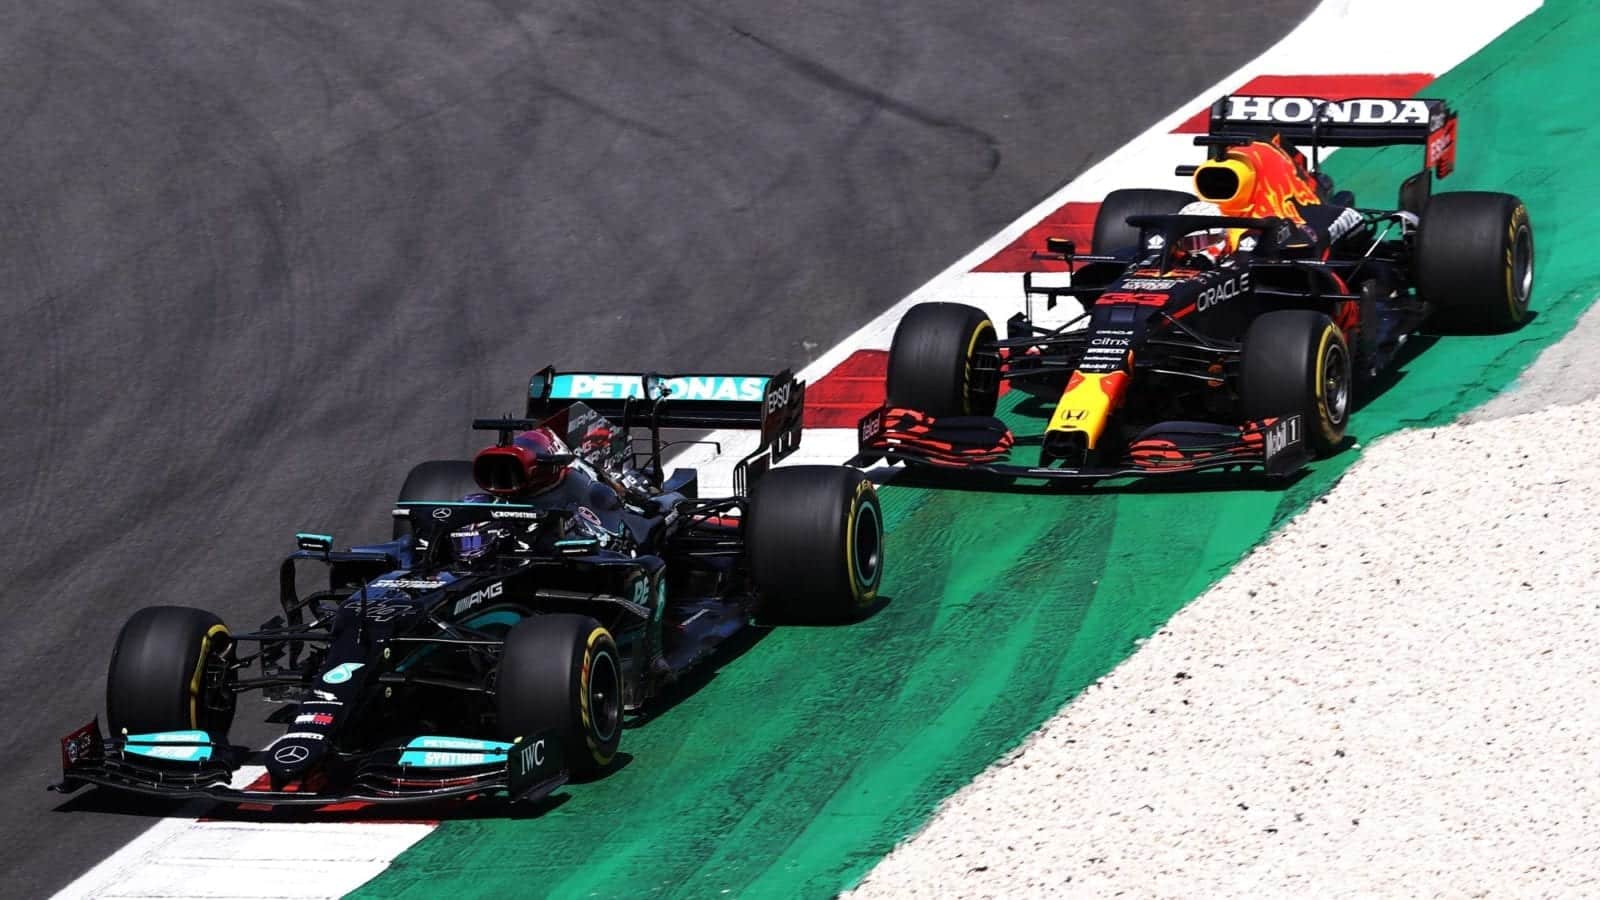 Lewis Hamilton, Max Verstappen, 2021 Portugueuse Grand Prix